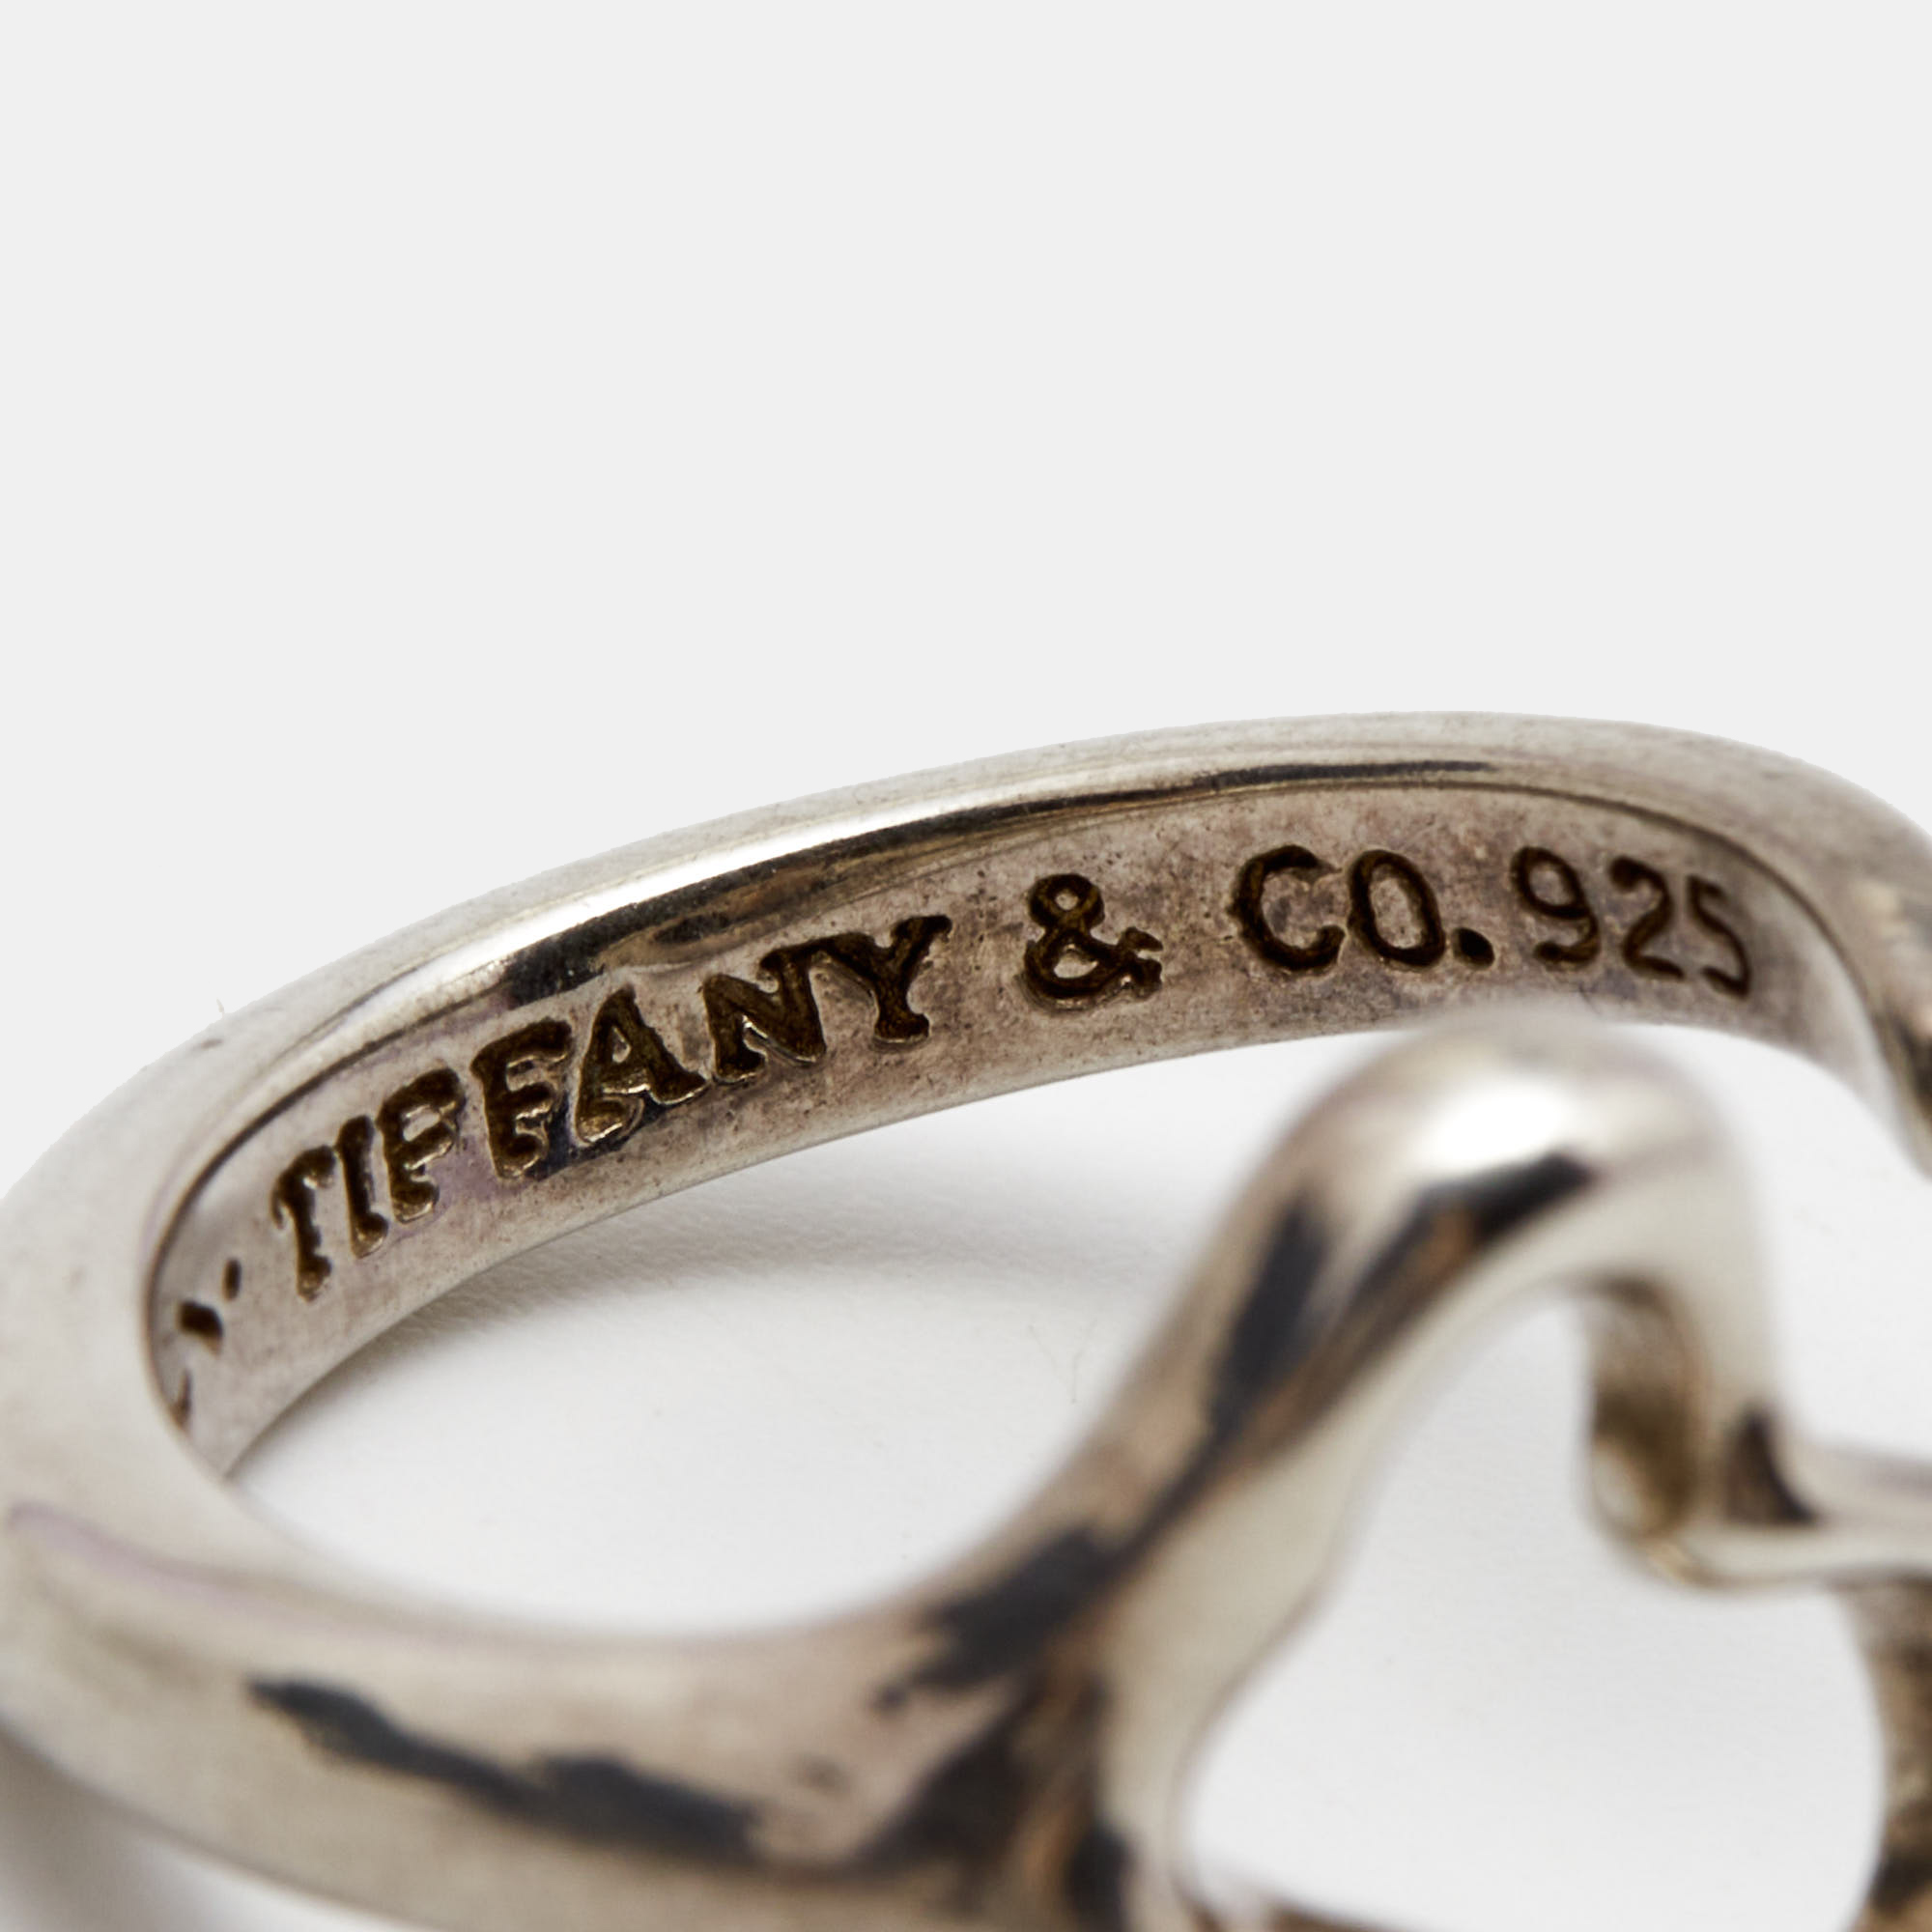 Tiffany & Co. Elsa Peretti Open Heart Sterling Silver Ring Size 52